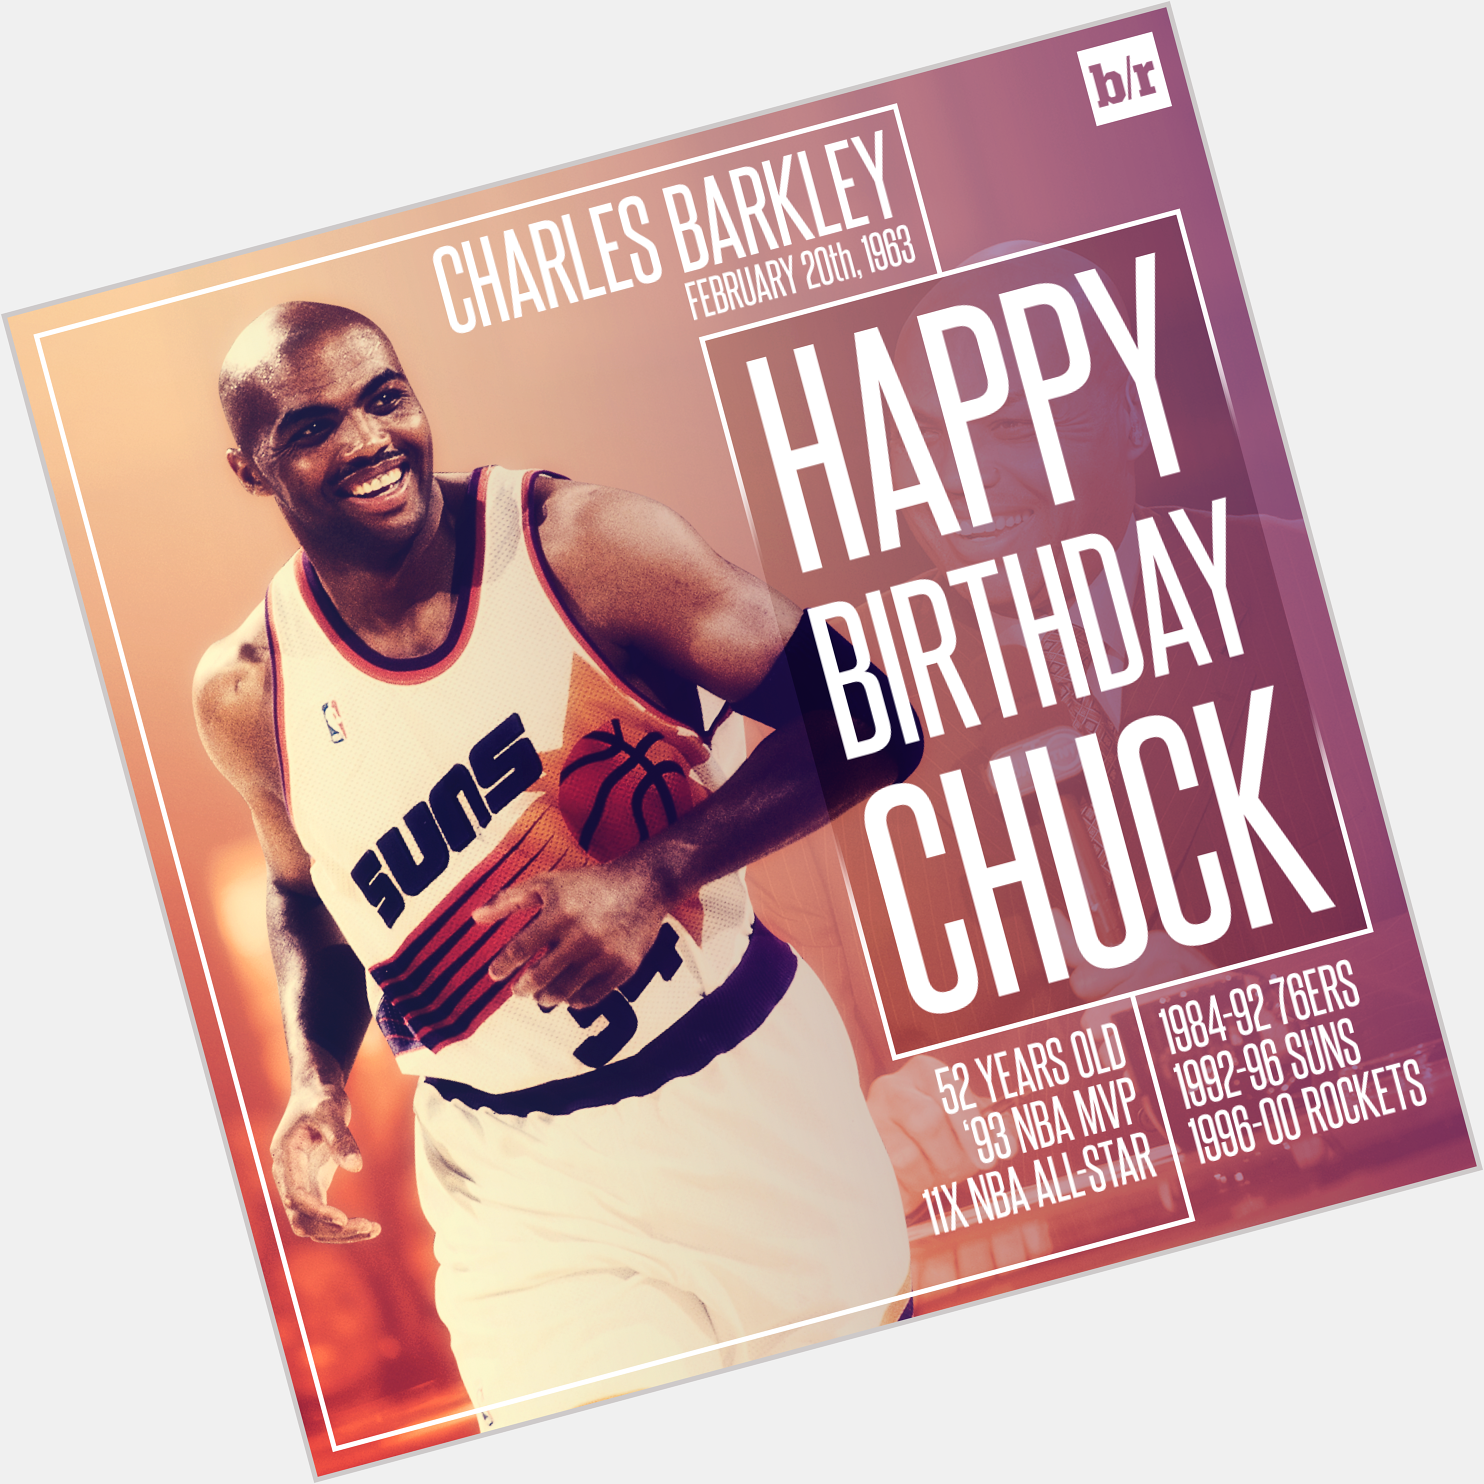  Happy birthday Chuck!  fuck Charles Barkley ole trash ass dude